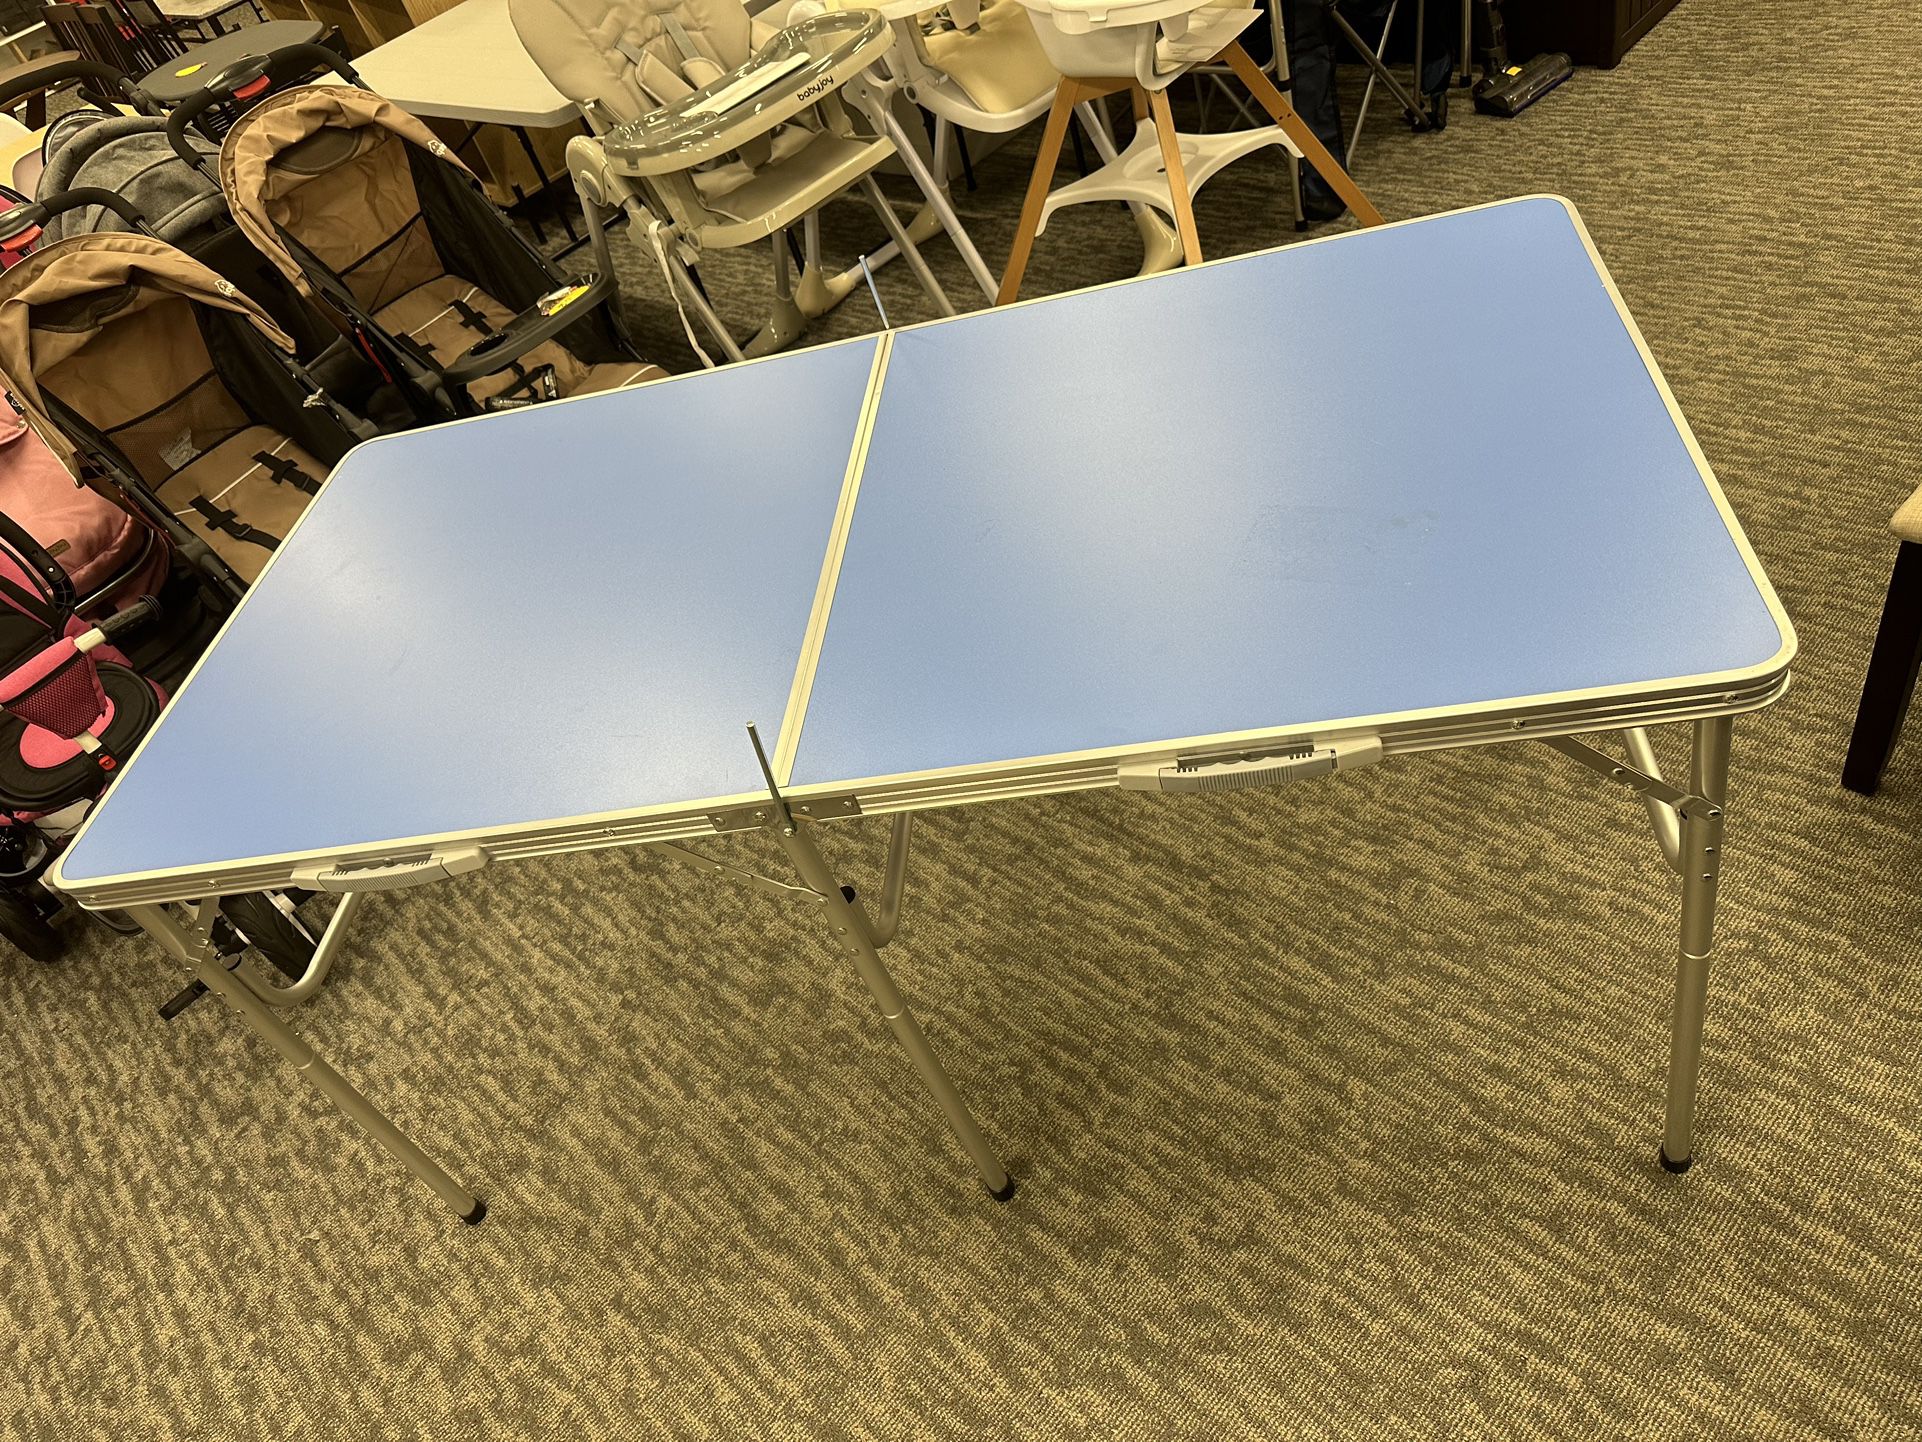 Tennis Table Ping Pong Table Professional Table Tennis Table Portable Foldable Outdoor Table Tennis Ping-Pang Table